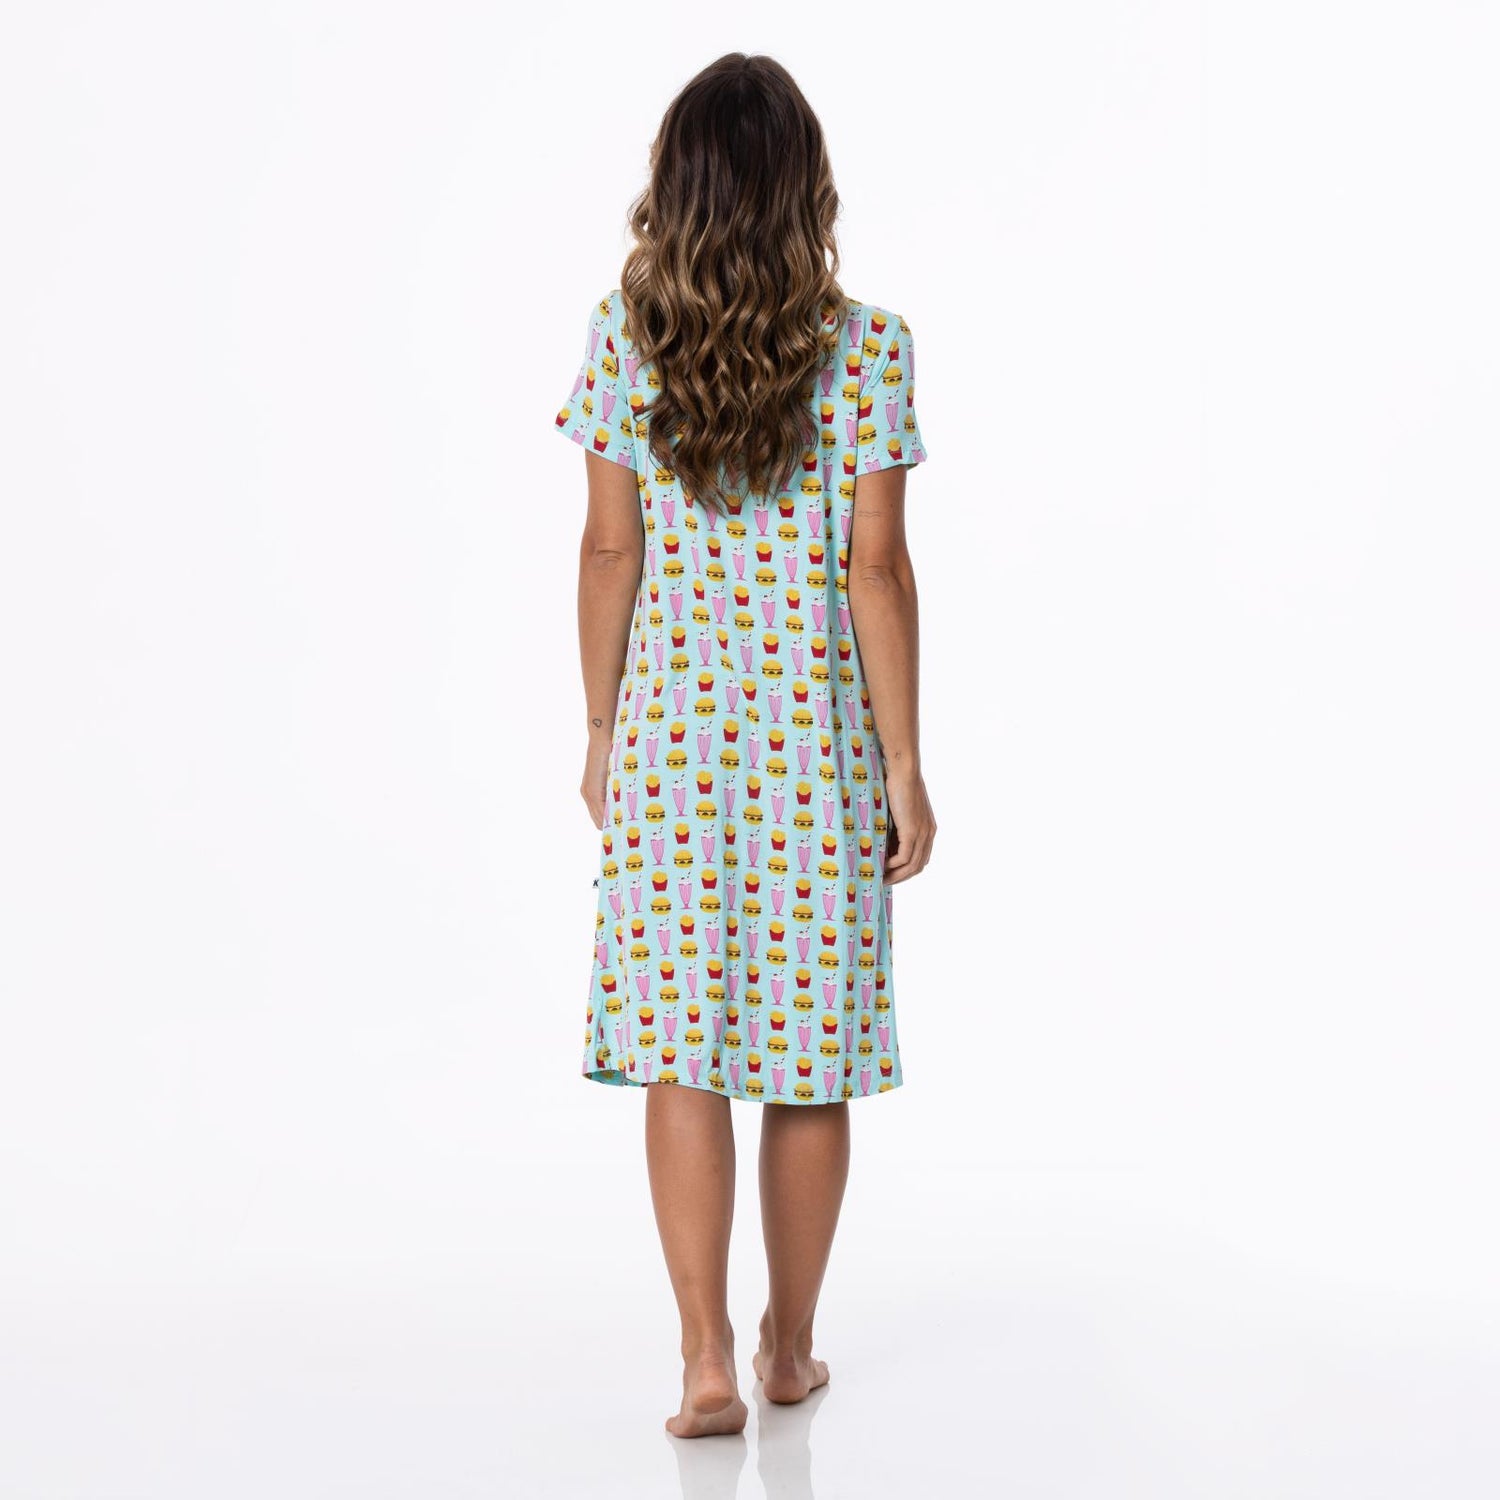 Women's Print Nursing Nightgown in Summer Sky Cheeseburger